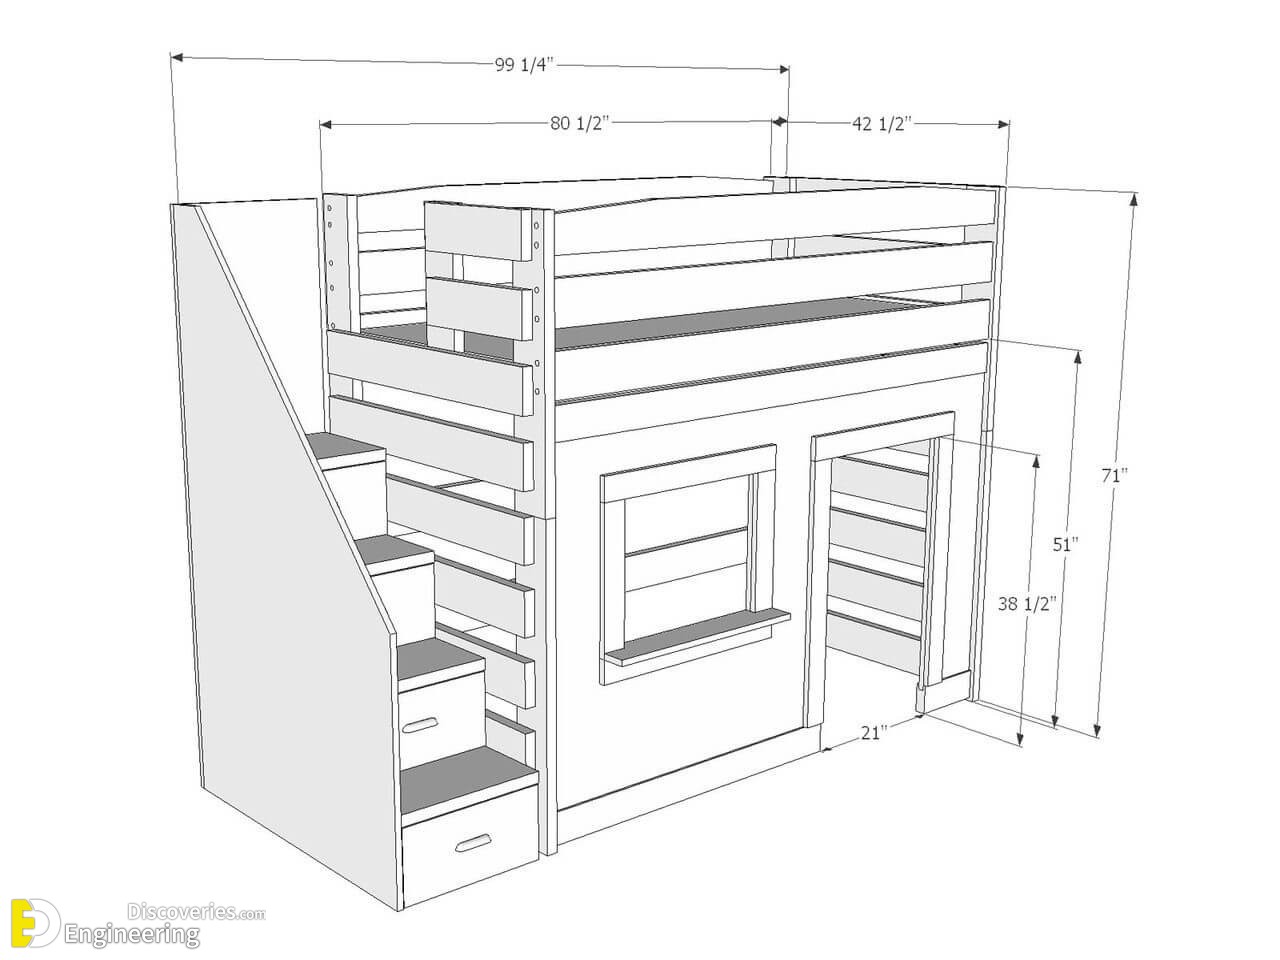 dimensions of bunk bed mattresses